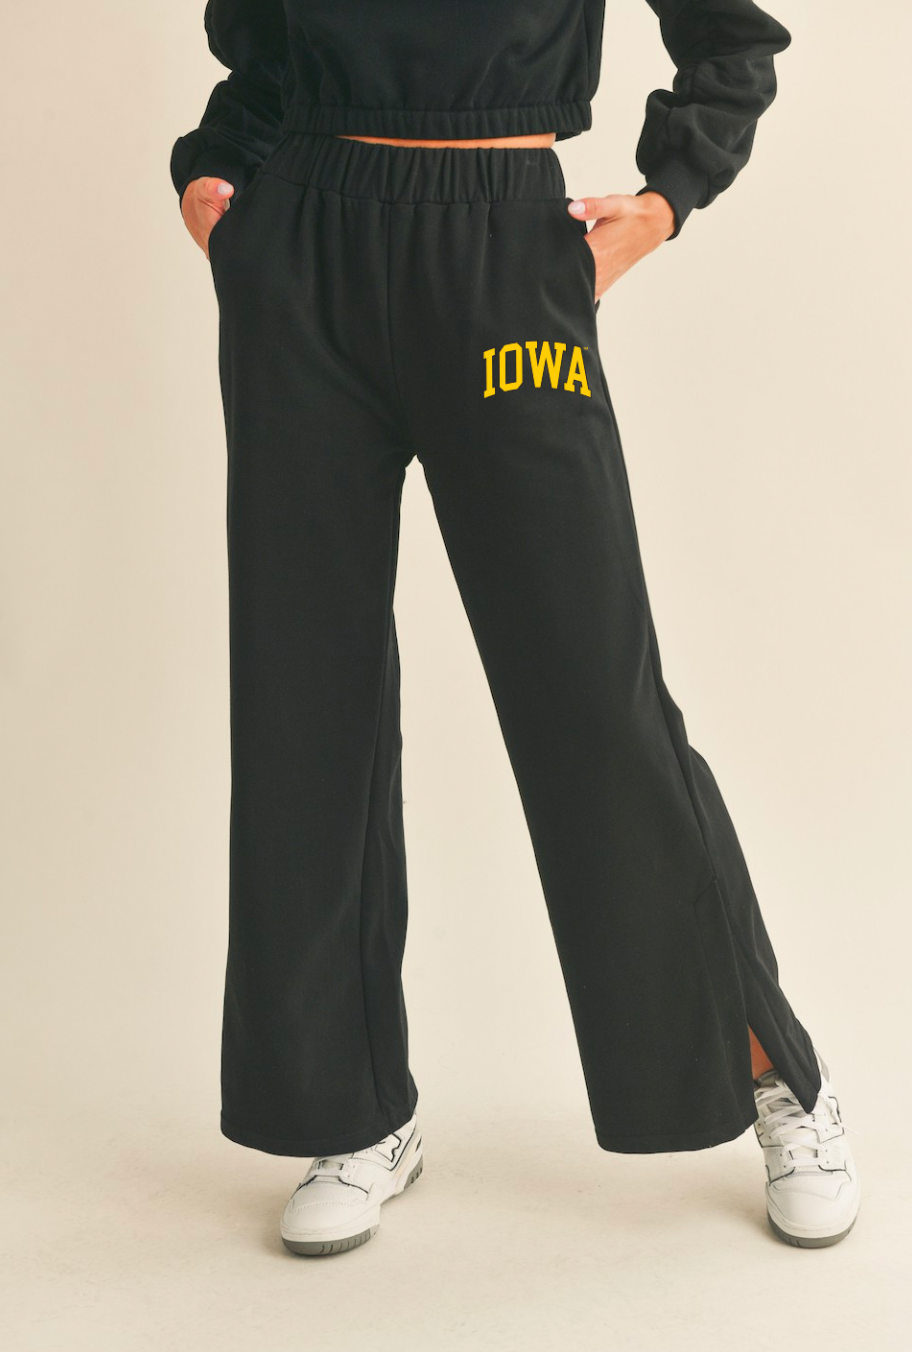 Iowa Block Wide Leg Sweatpants